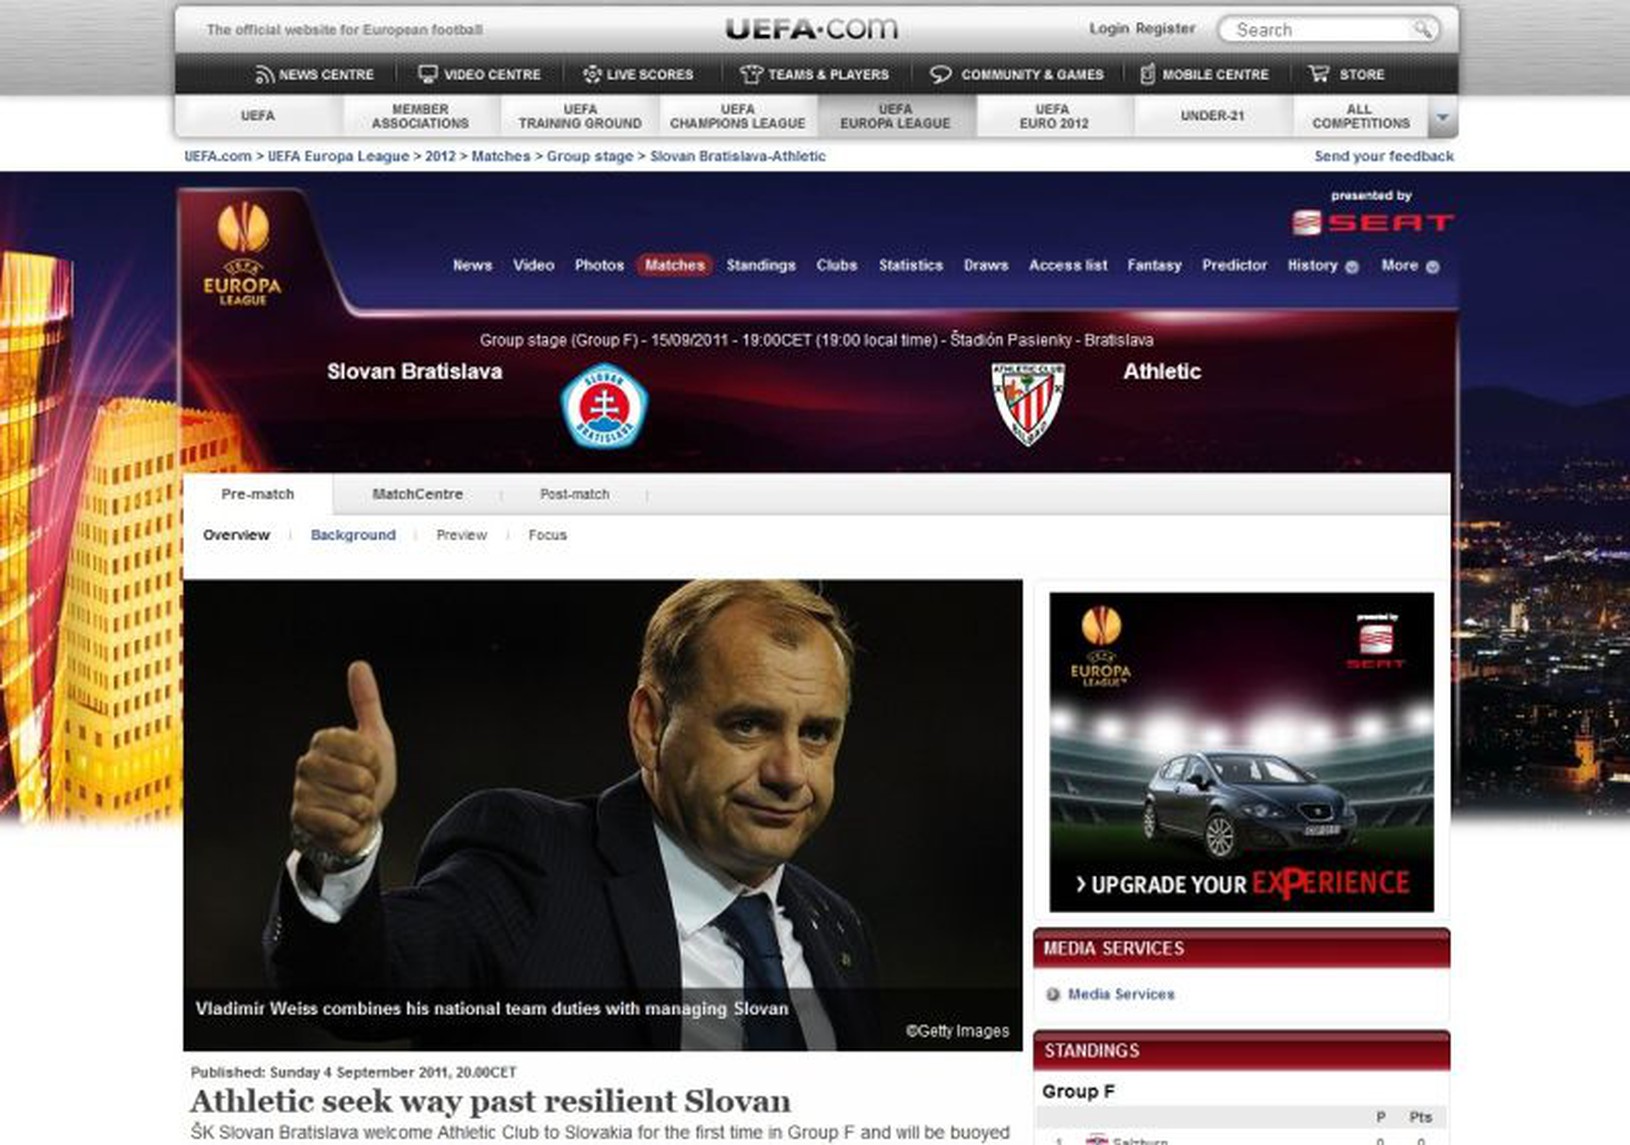 Stránka www.uefa.com informuje o